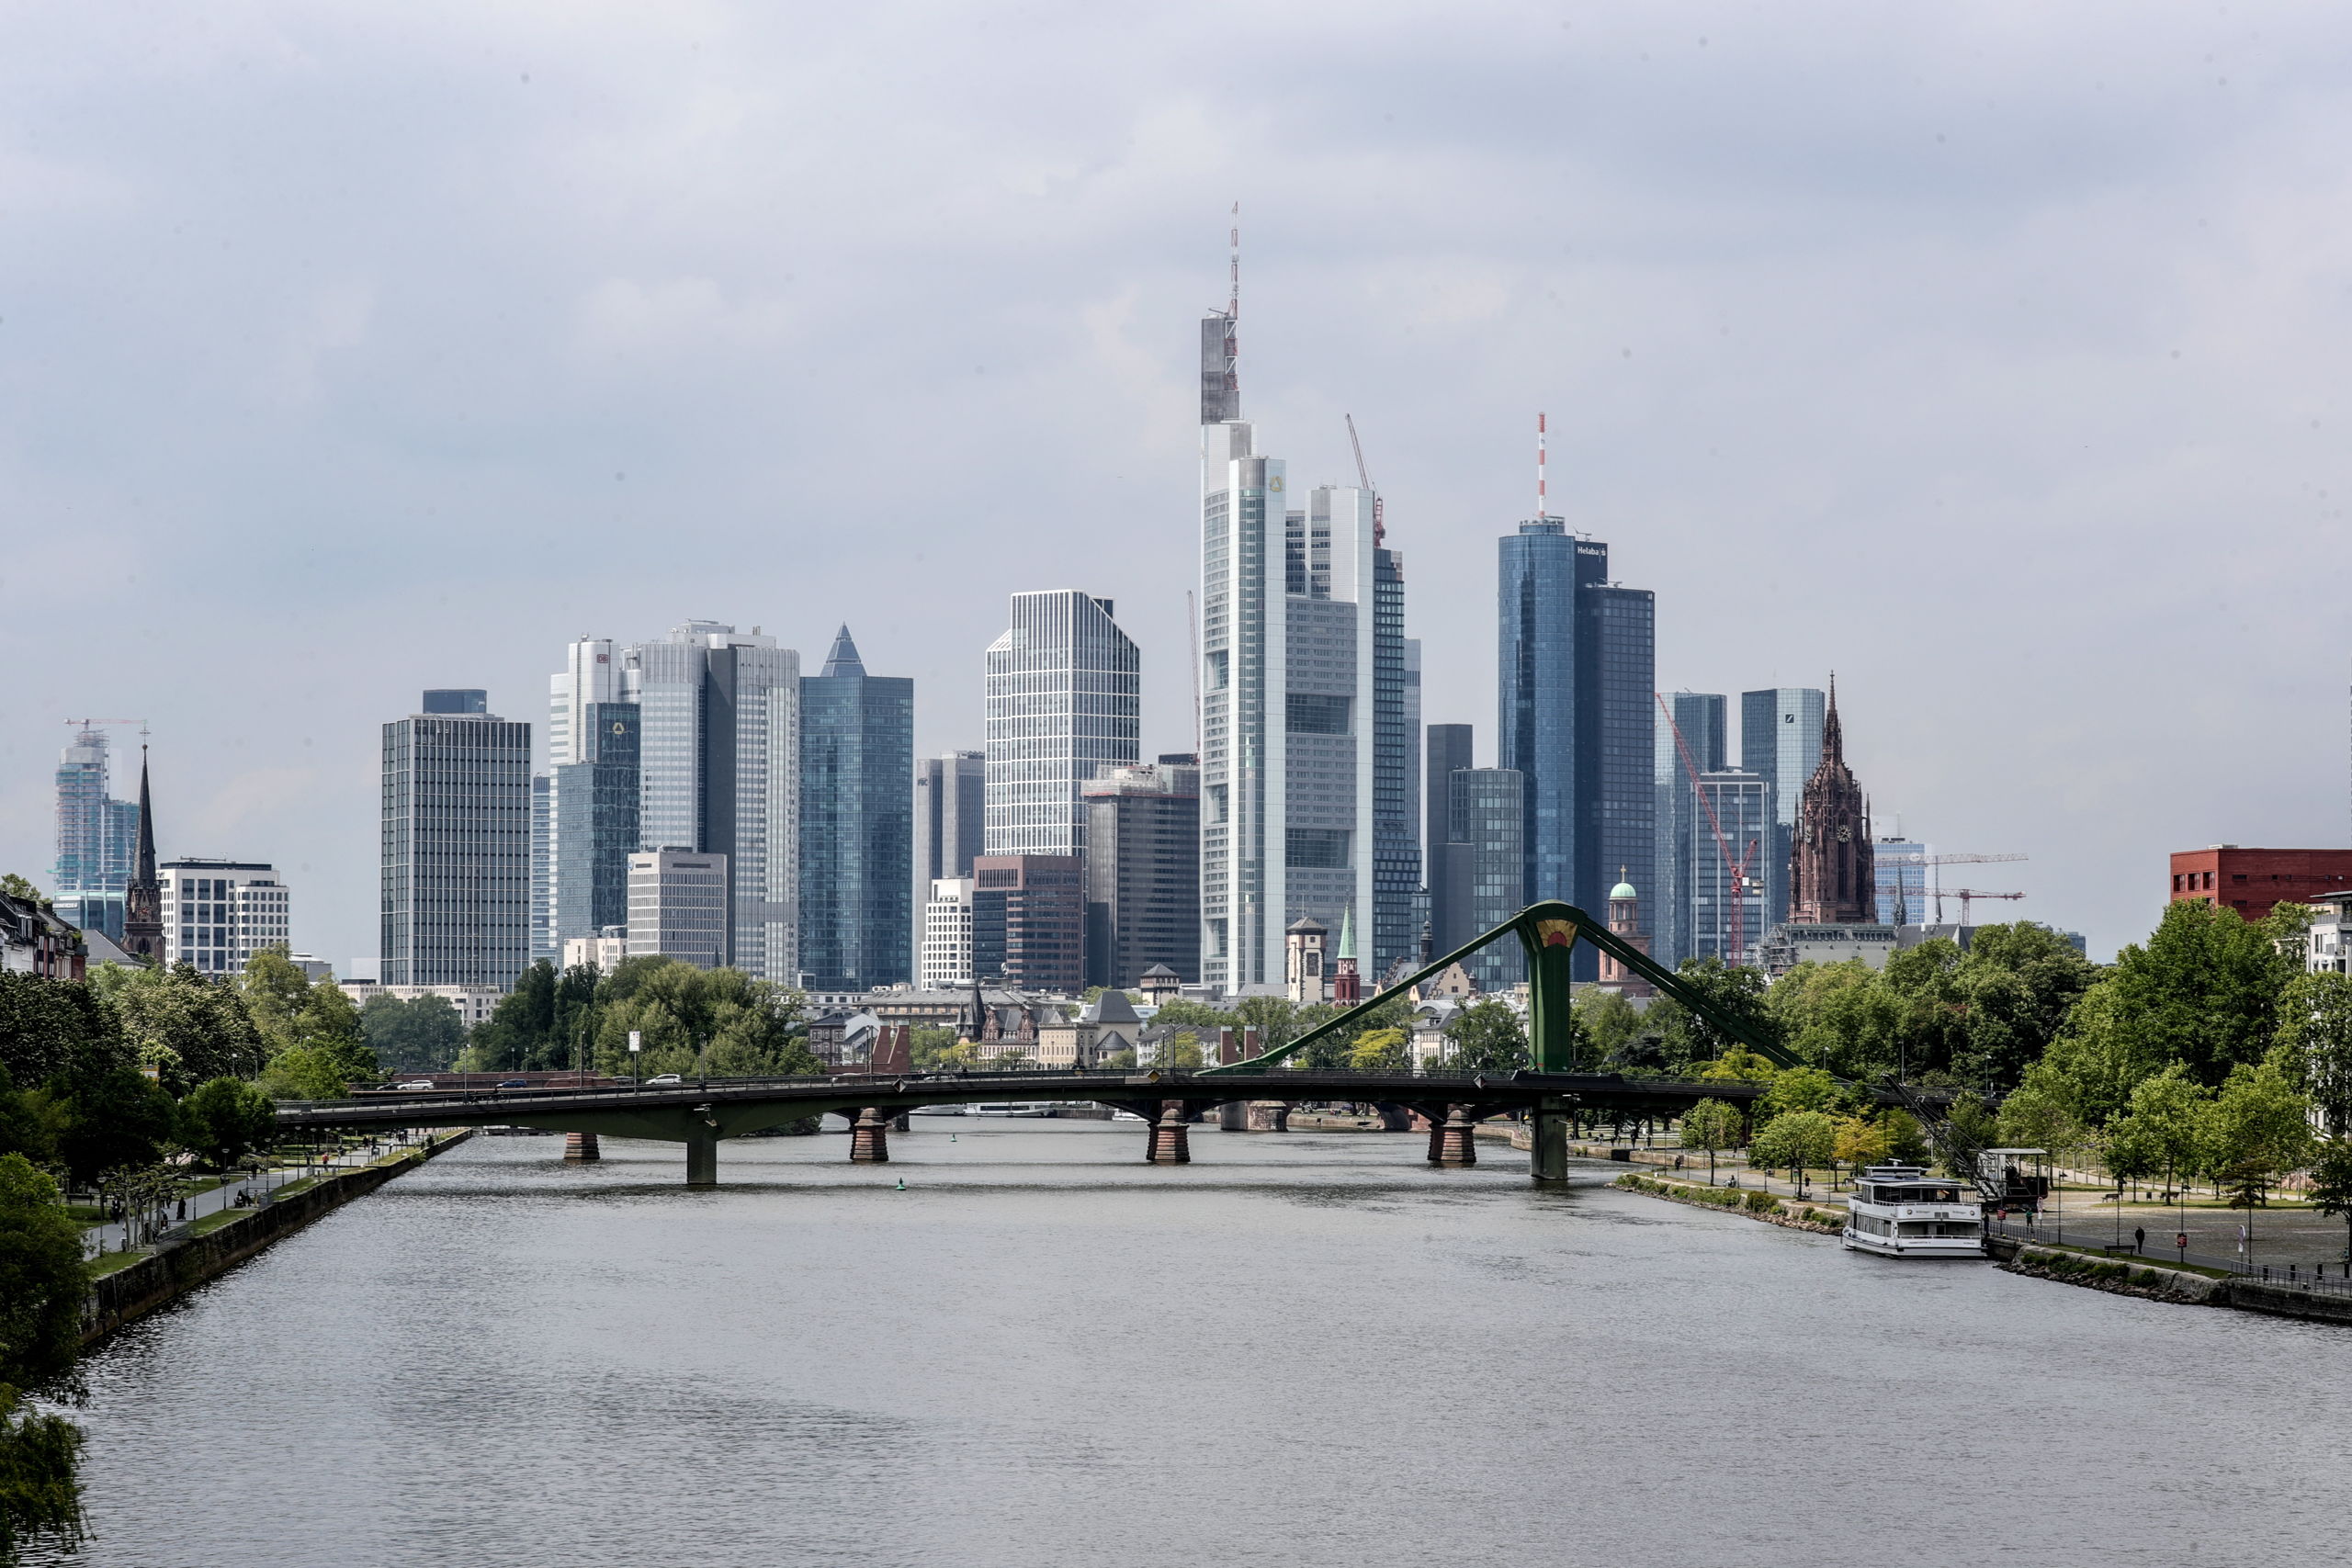 De skyline van Frankfurt am Main, hét financiële centrum van Europa. 